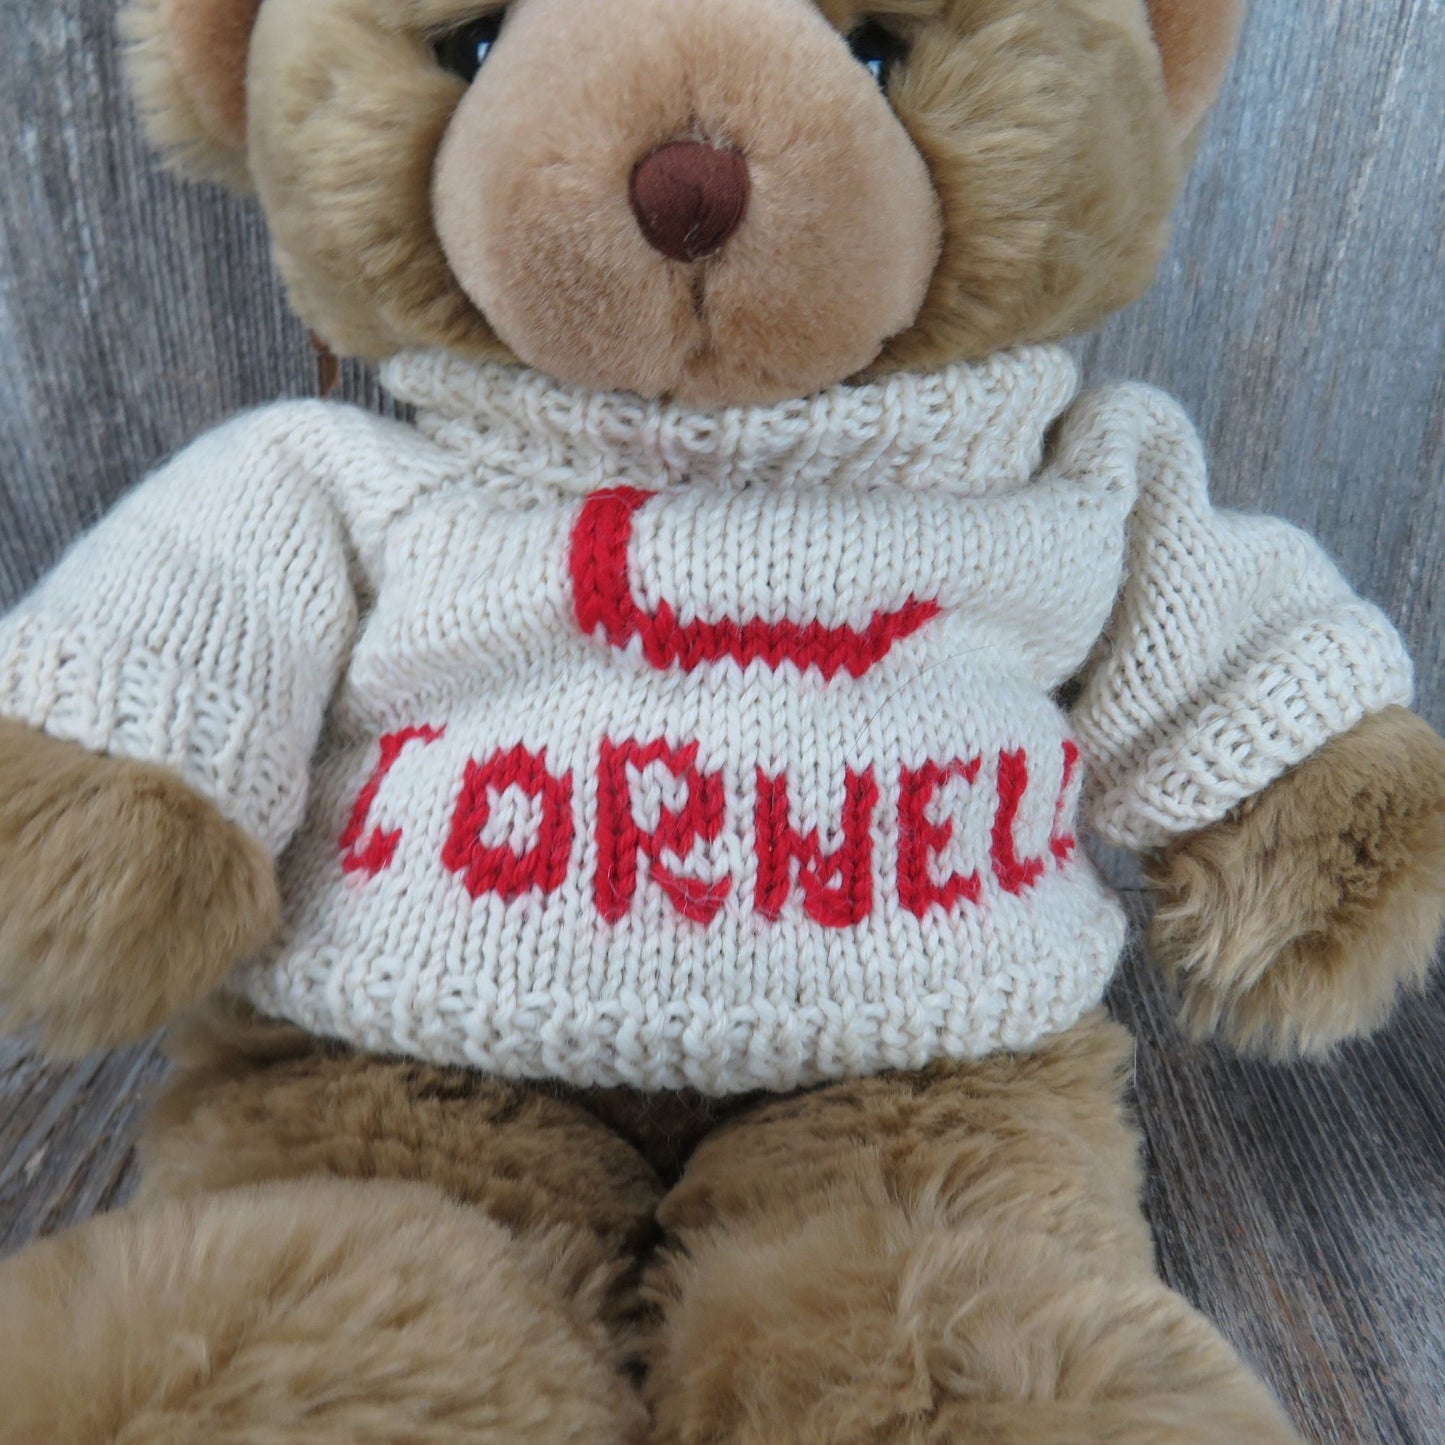 Teddy Bear Plush Cornwell Sweater Mary Meyer Brown Fuzzy Stuffed Animal 1994